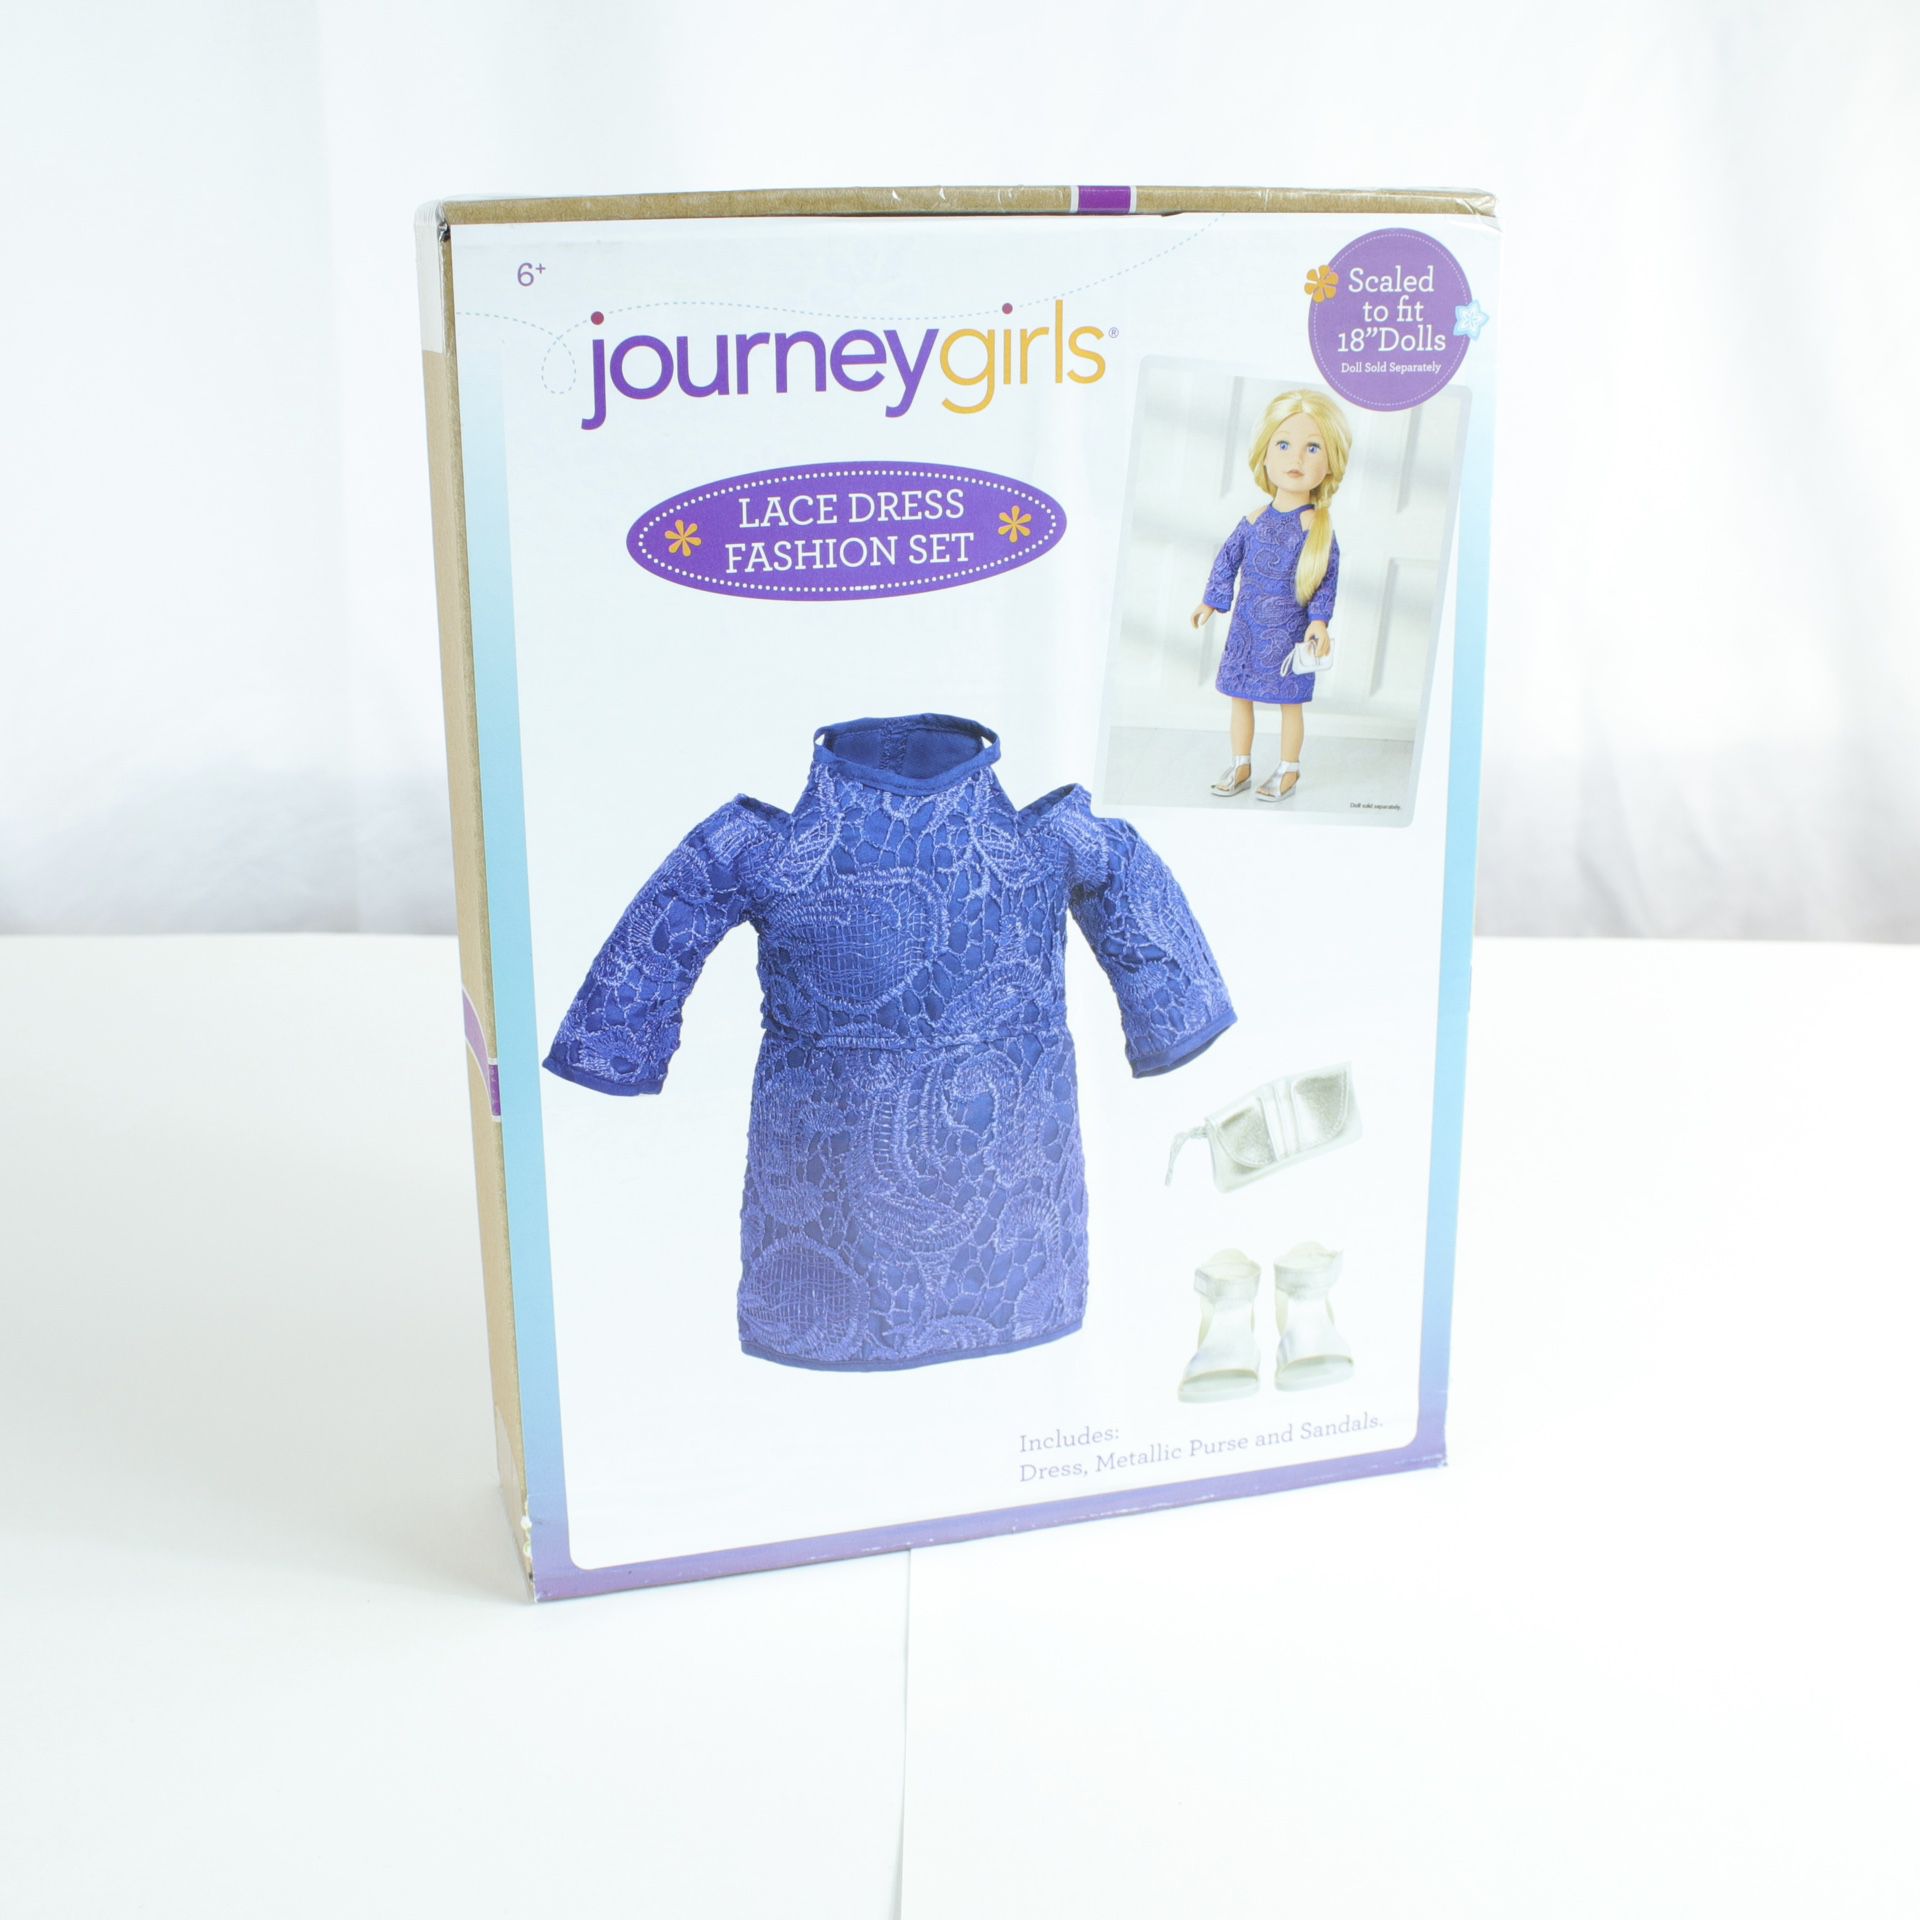 Journey Girls Blue Lace Dress Fashion Set Scaled to fit 18" Dolls - NEW